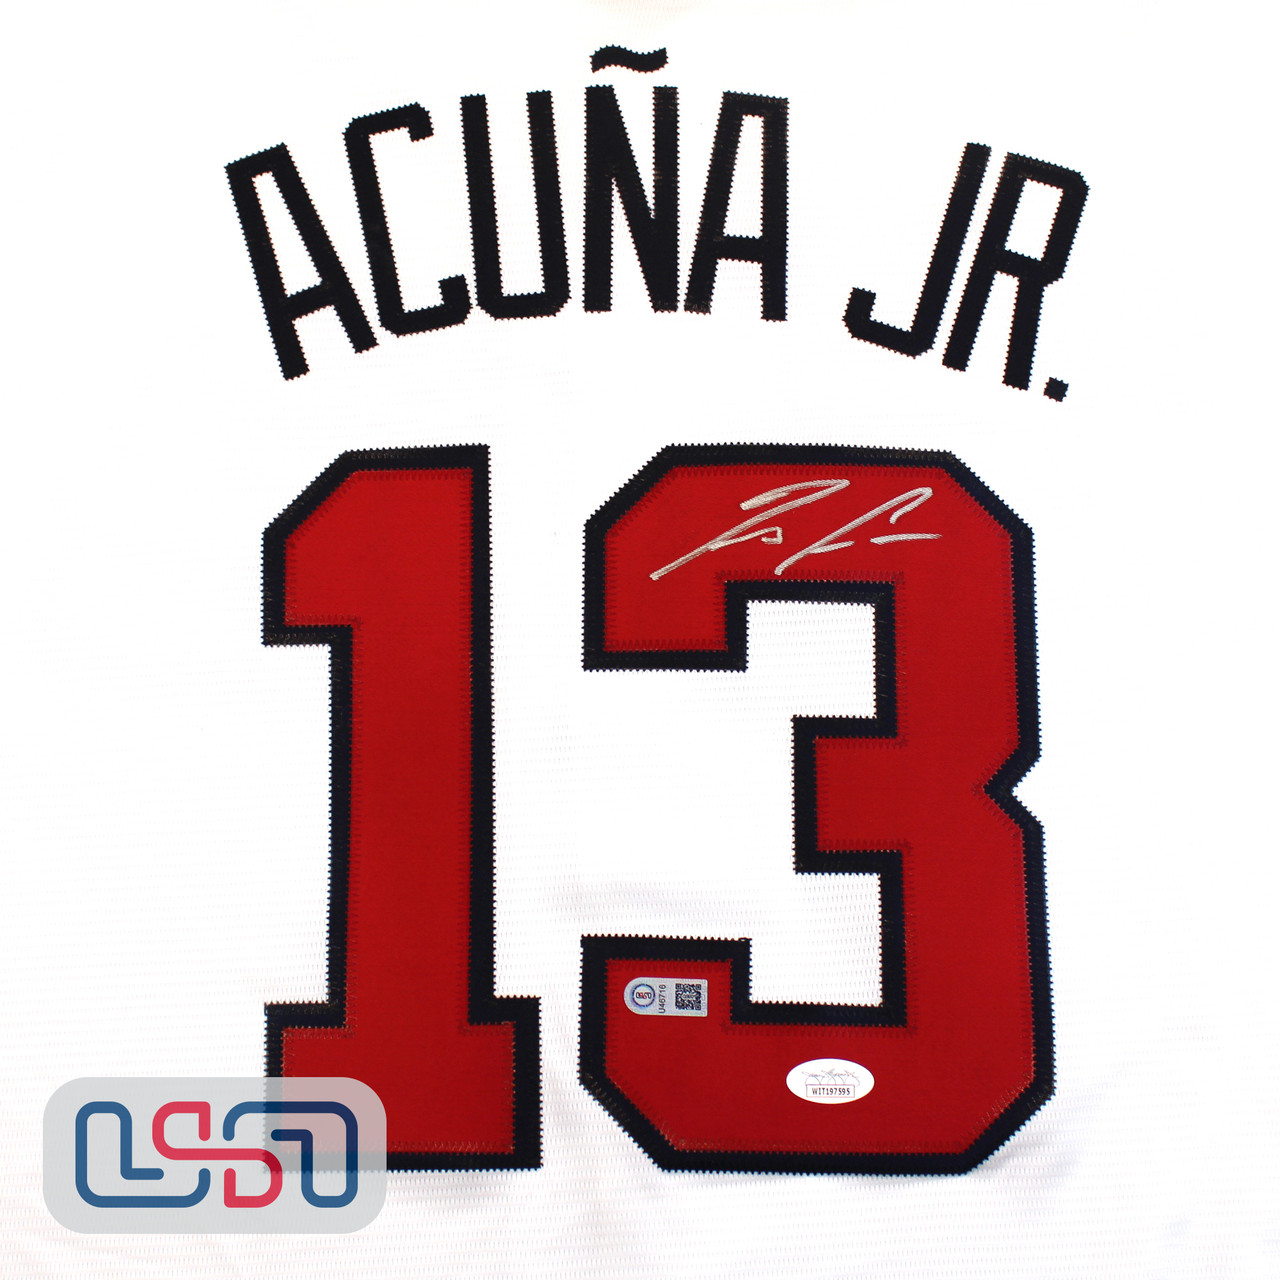 Ronald Acuna Jr Signed Atlanta Braves Jersey (USA SM) 2018 N.L.